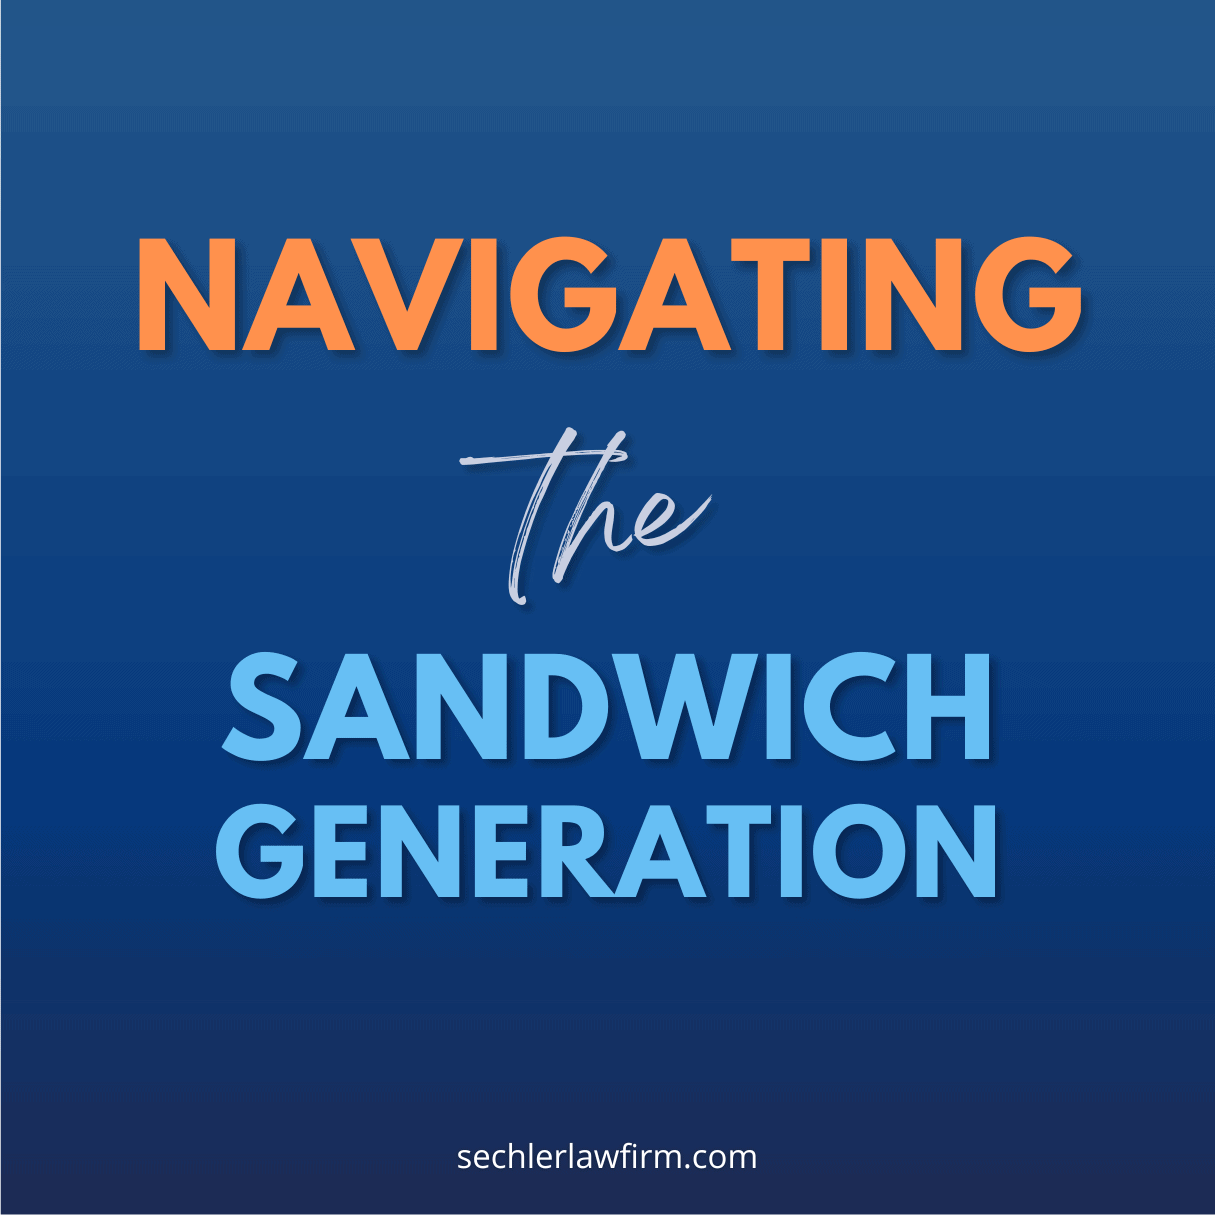 Navigating the Sandwich Generation